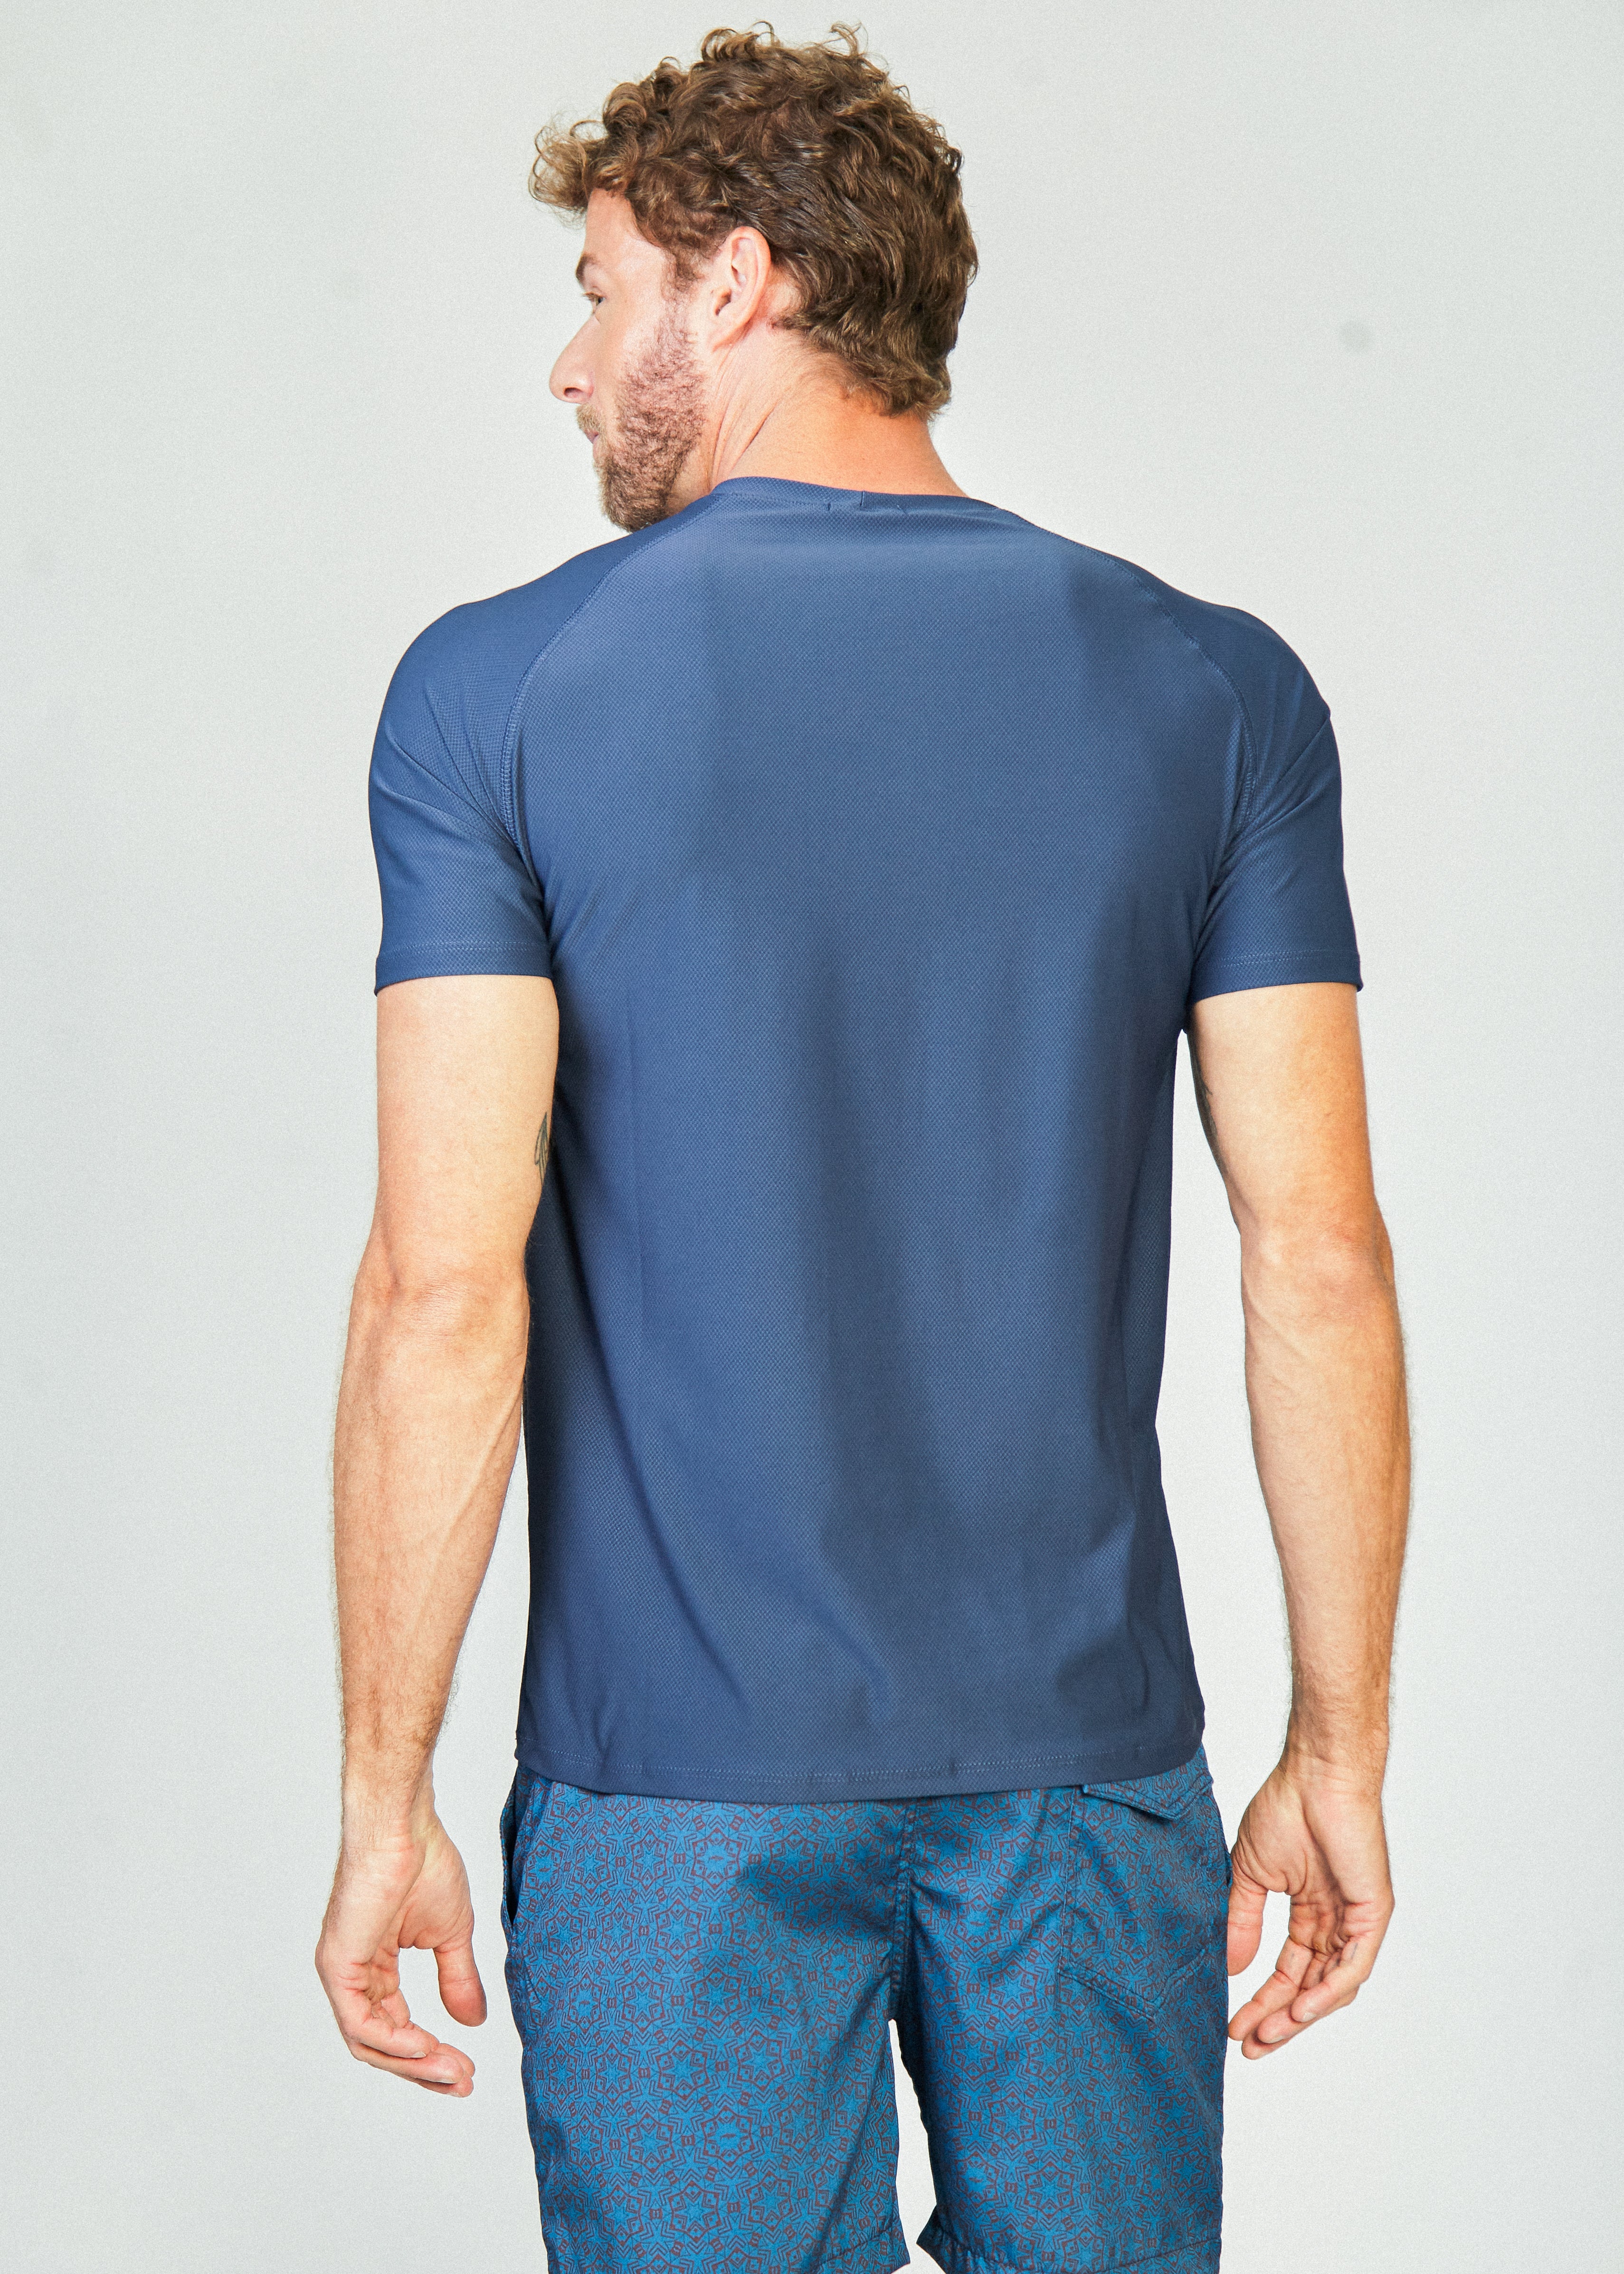 Camiseta Slim Dry Fit - Azul Marinho